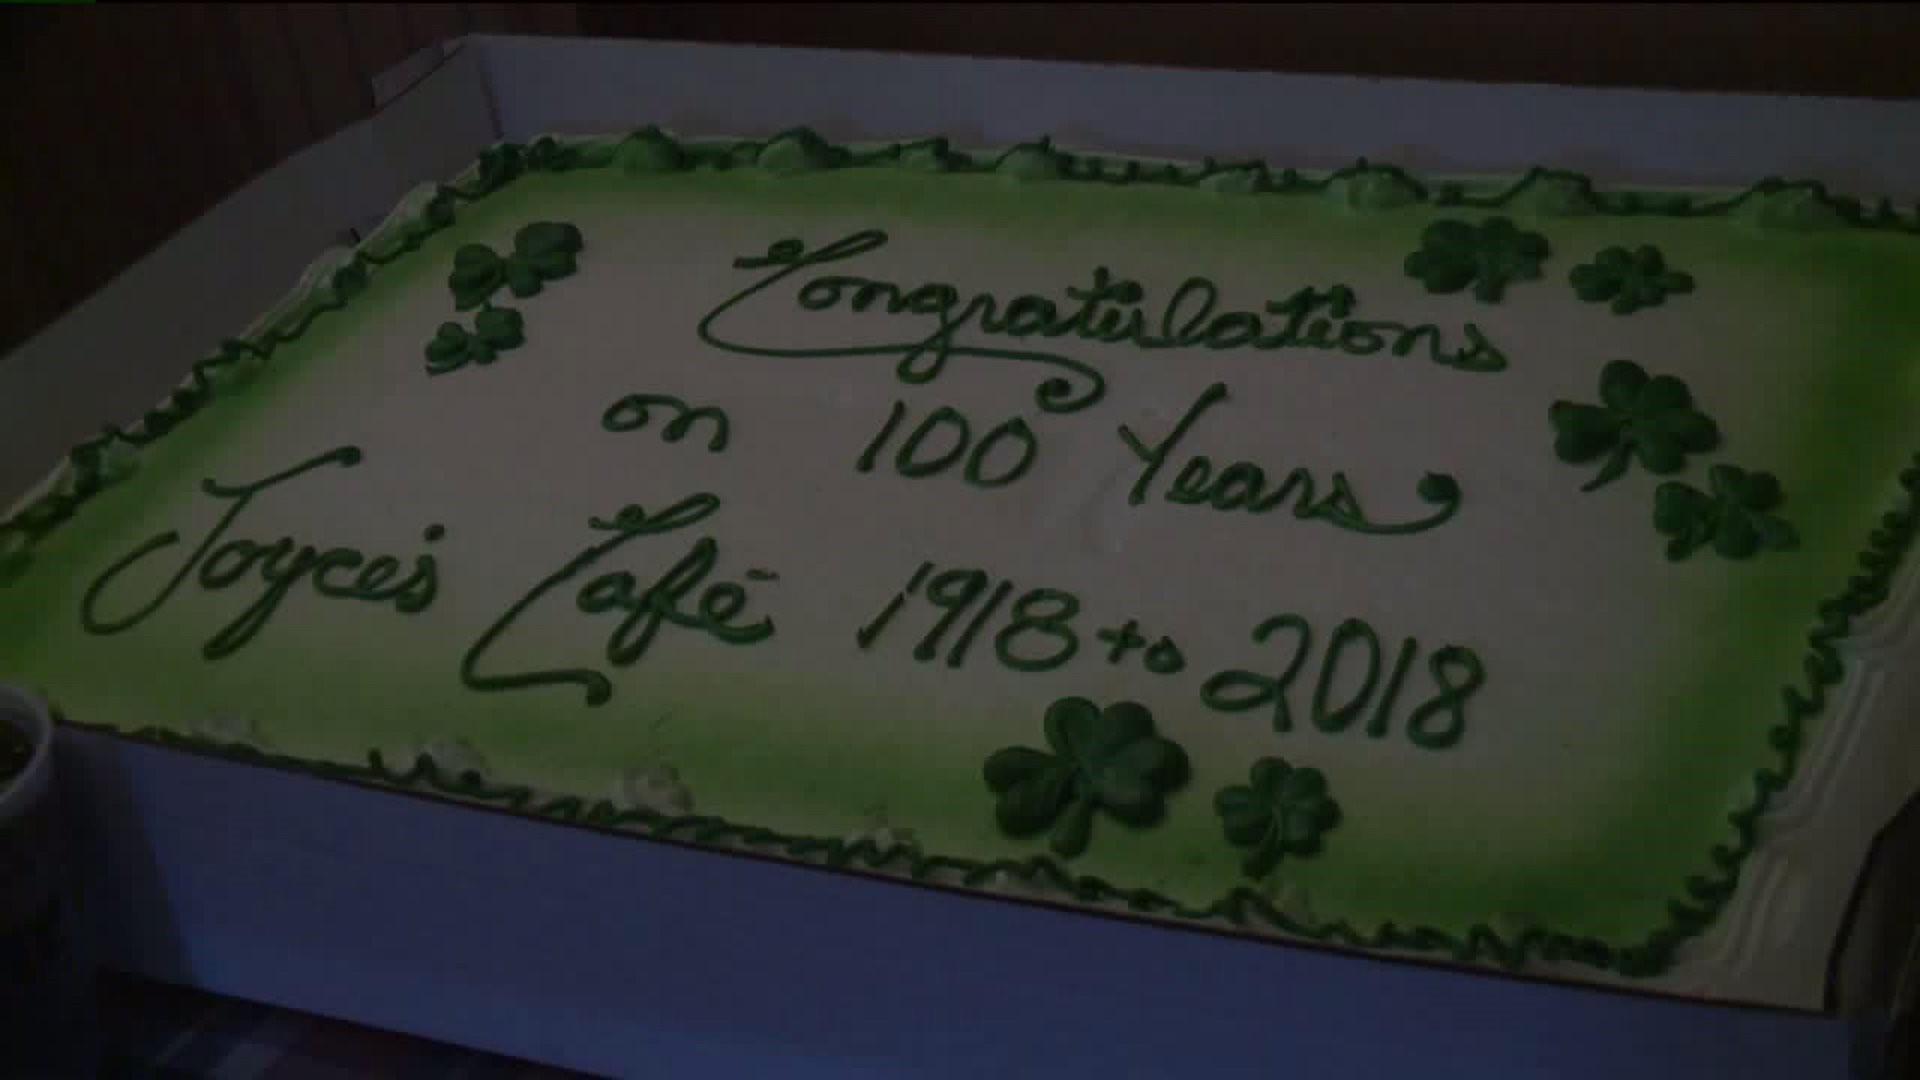 Joyce`s Caf Celebrates 100th Anniversary in Scranton